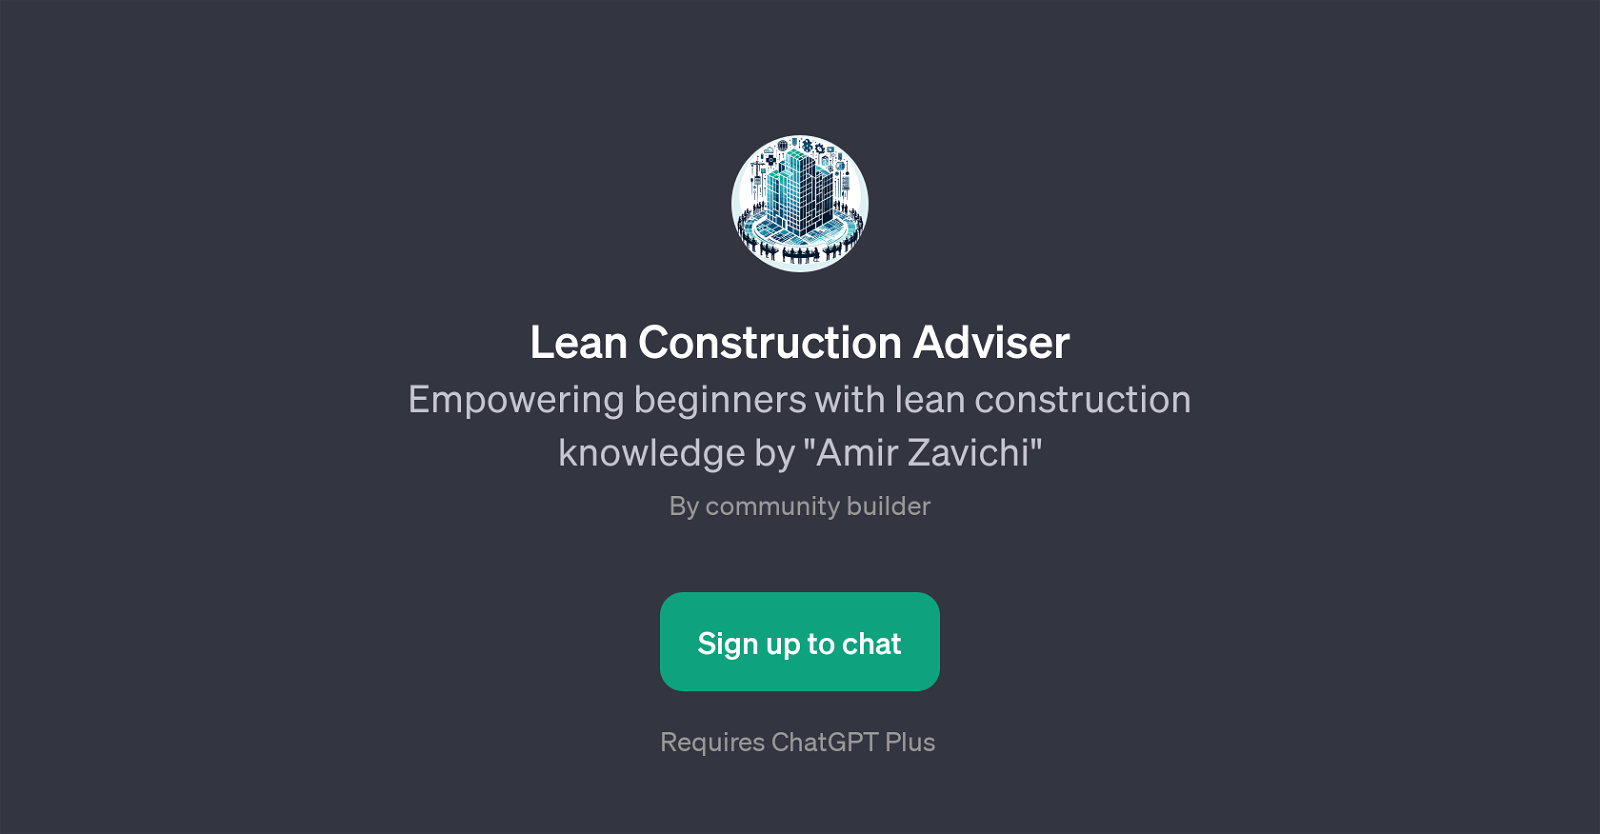 Lean Construction Adviser website